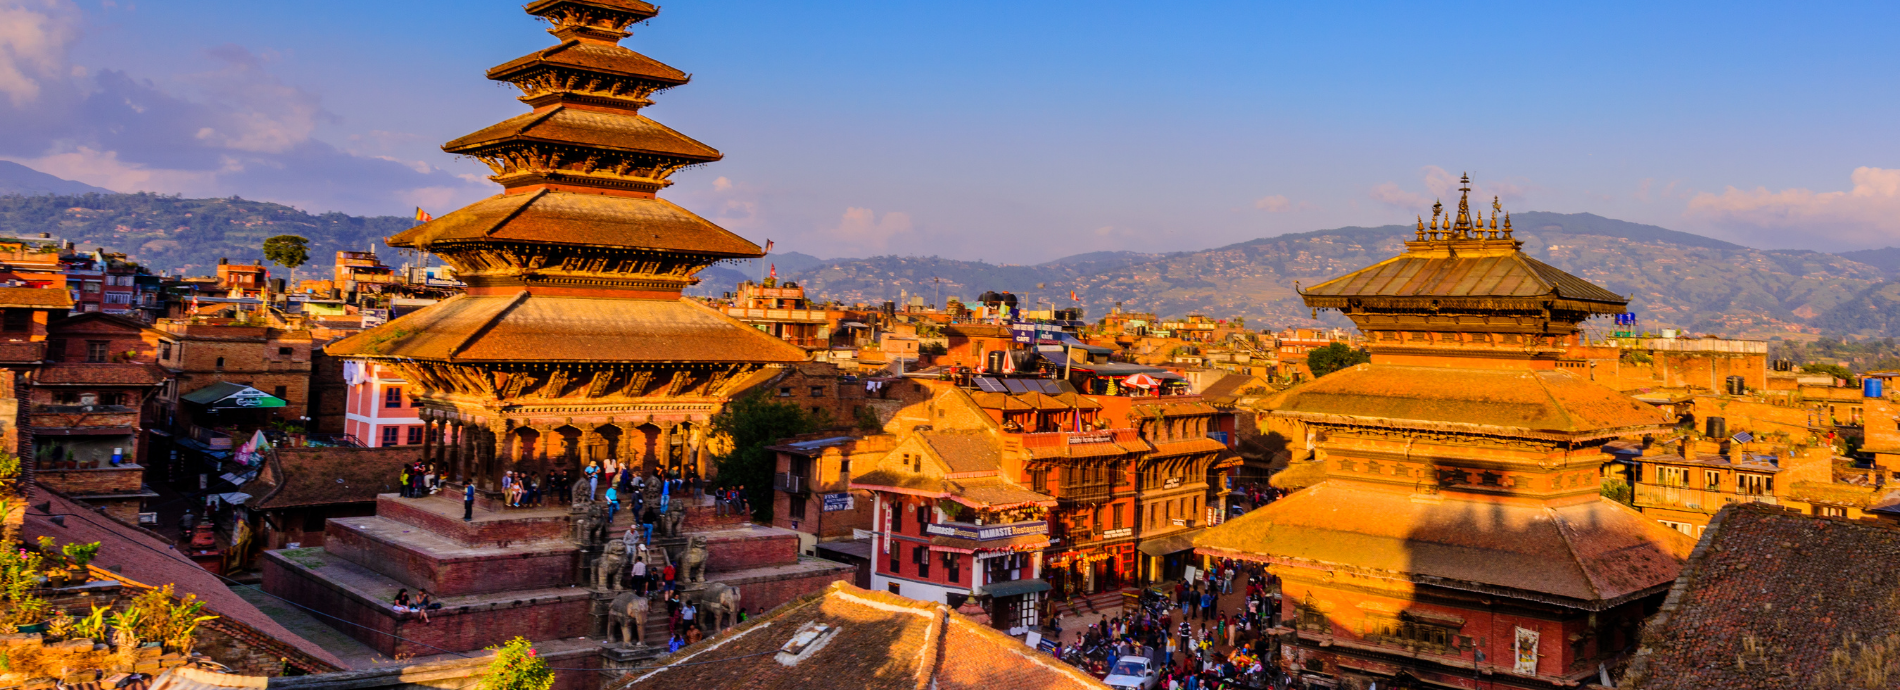 Most instagrammable spots in Nepal Banner